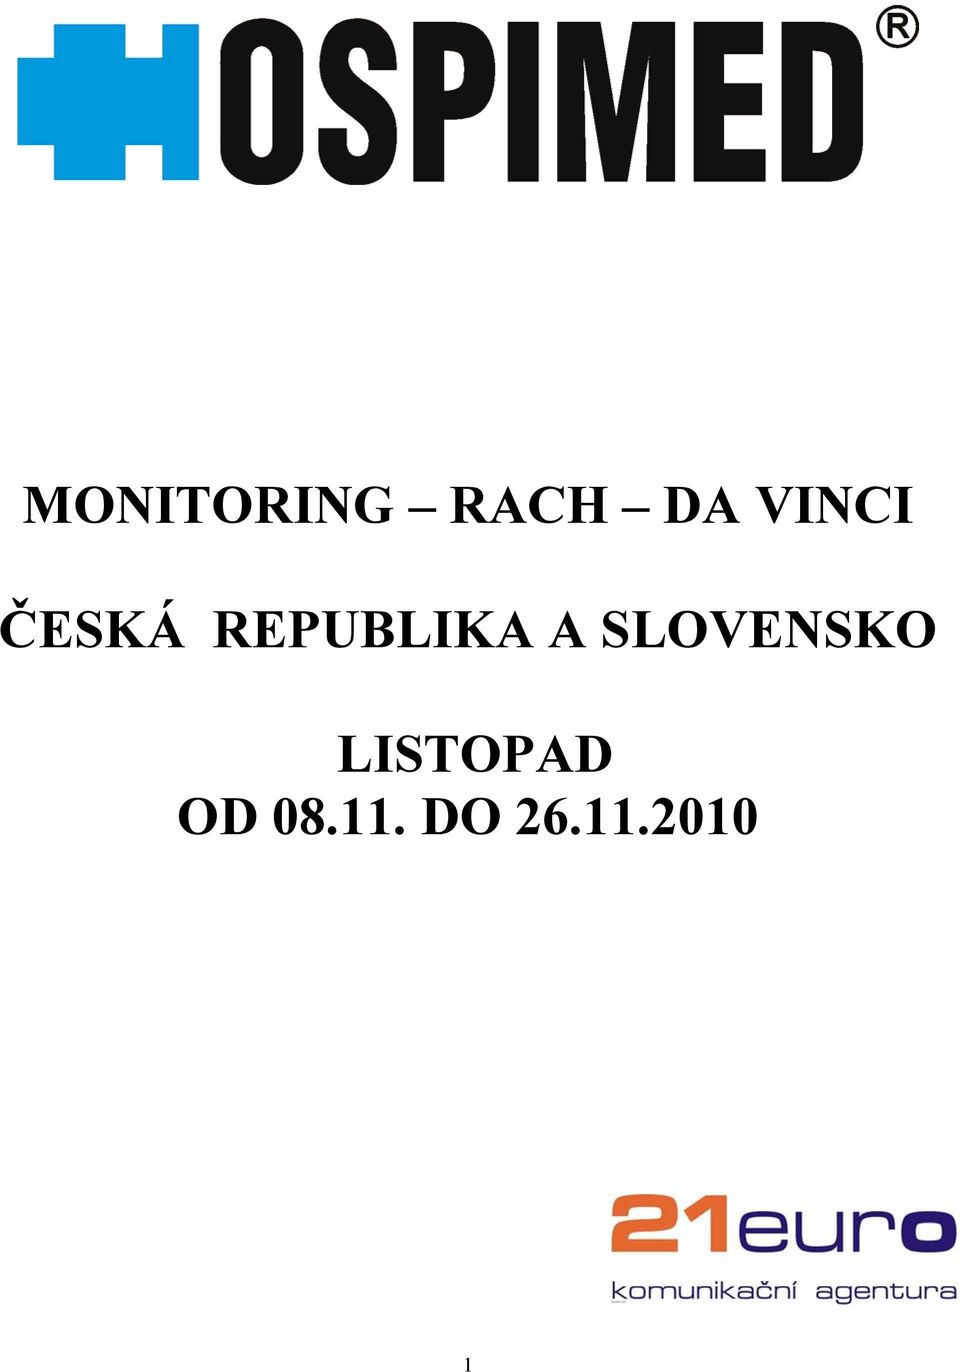 A SLOVENSKO LISTOPAD